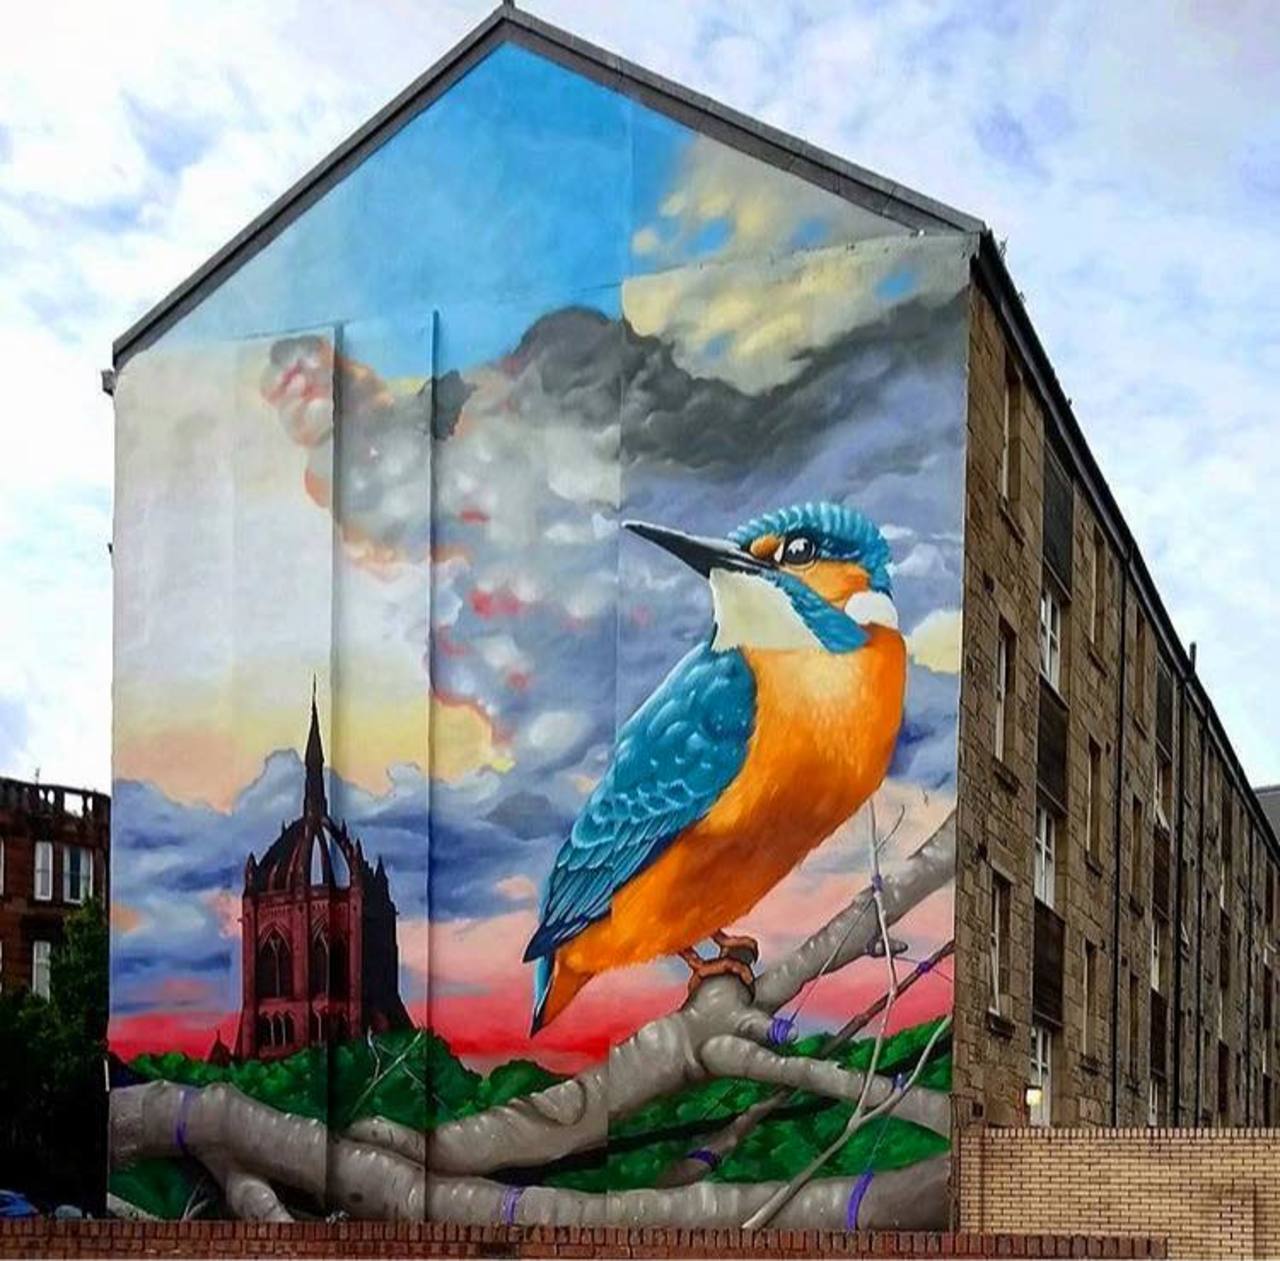 ... like a bird, like a horizon. Art by Mark Worst in Paisley, Scotland #StreetArt #Art #Bird #Horizon #Graffiti #Mural #UrbanArt #Paisley https://t.co/2DlcmsLzCo